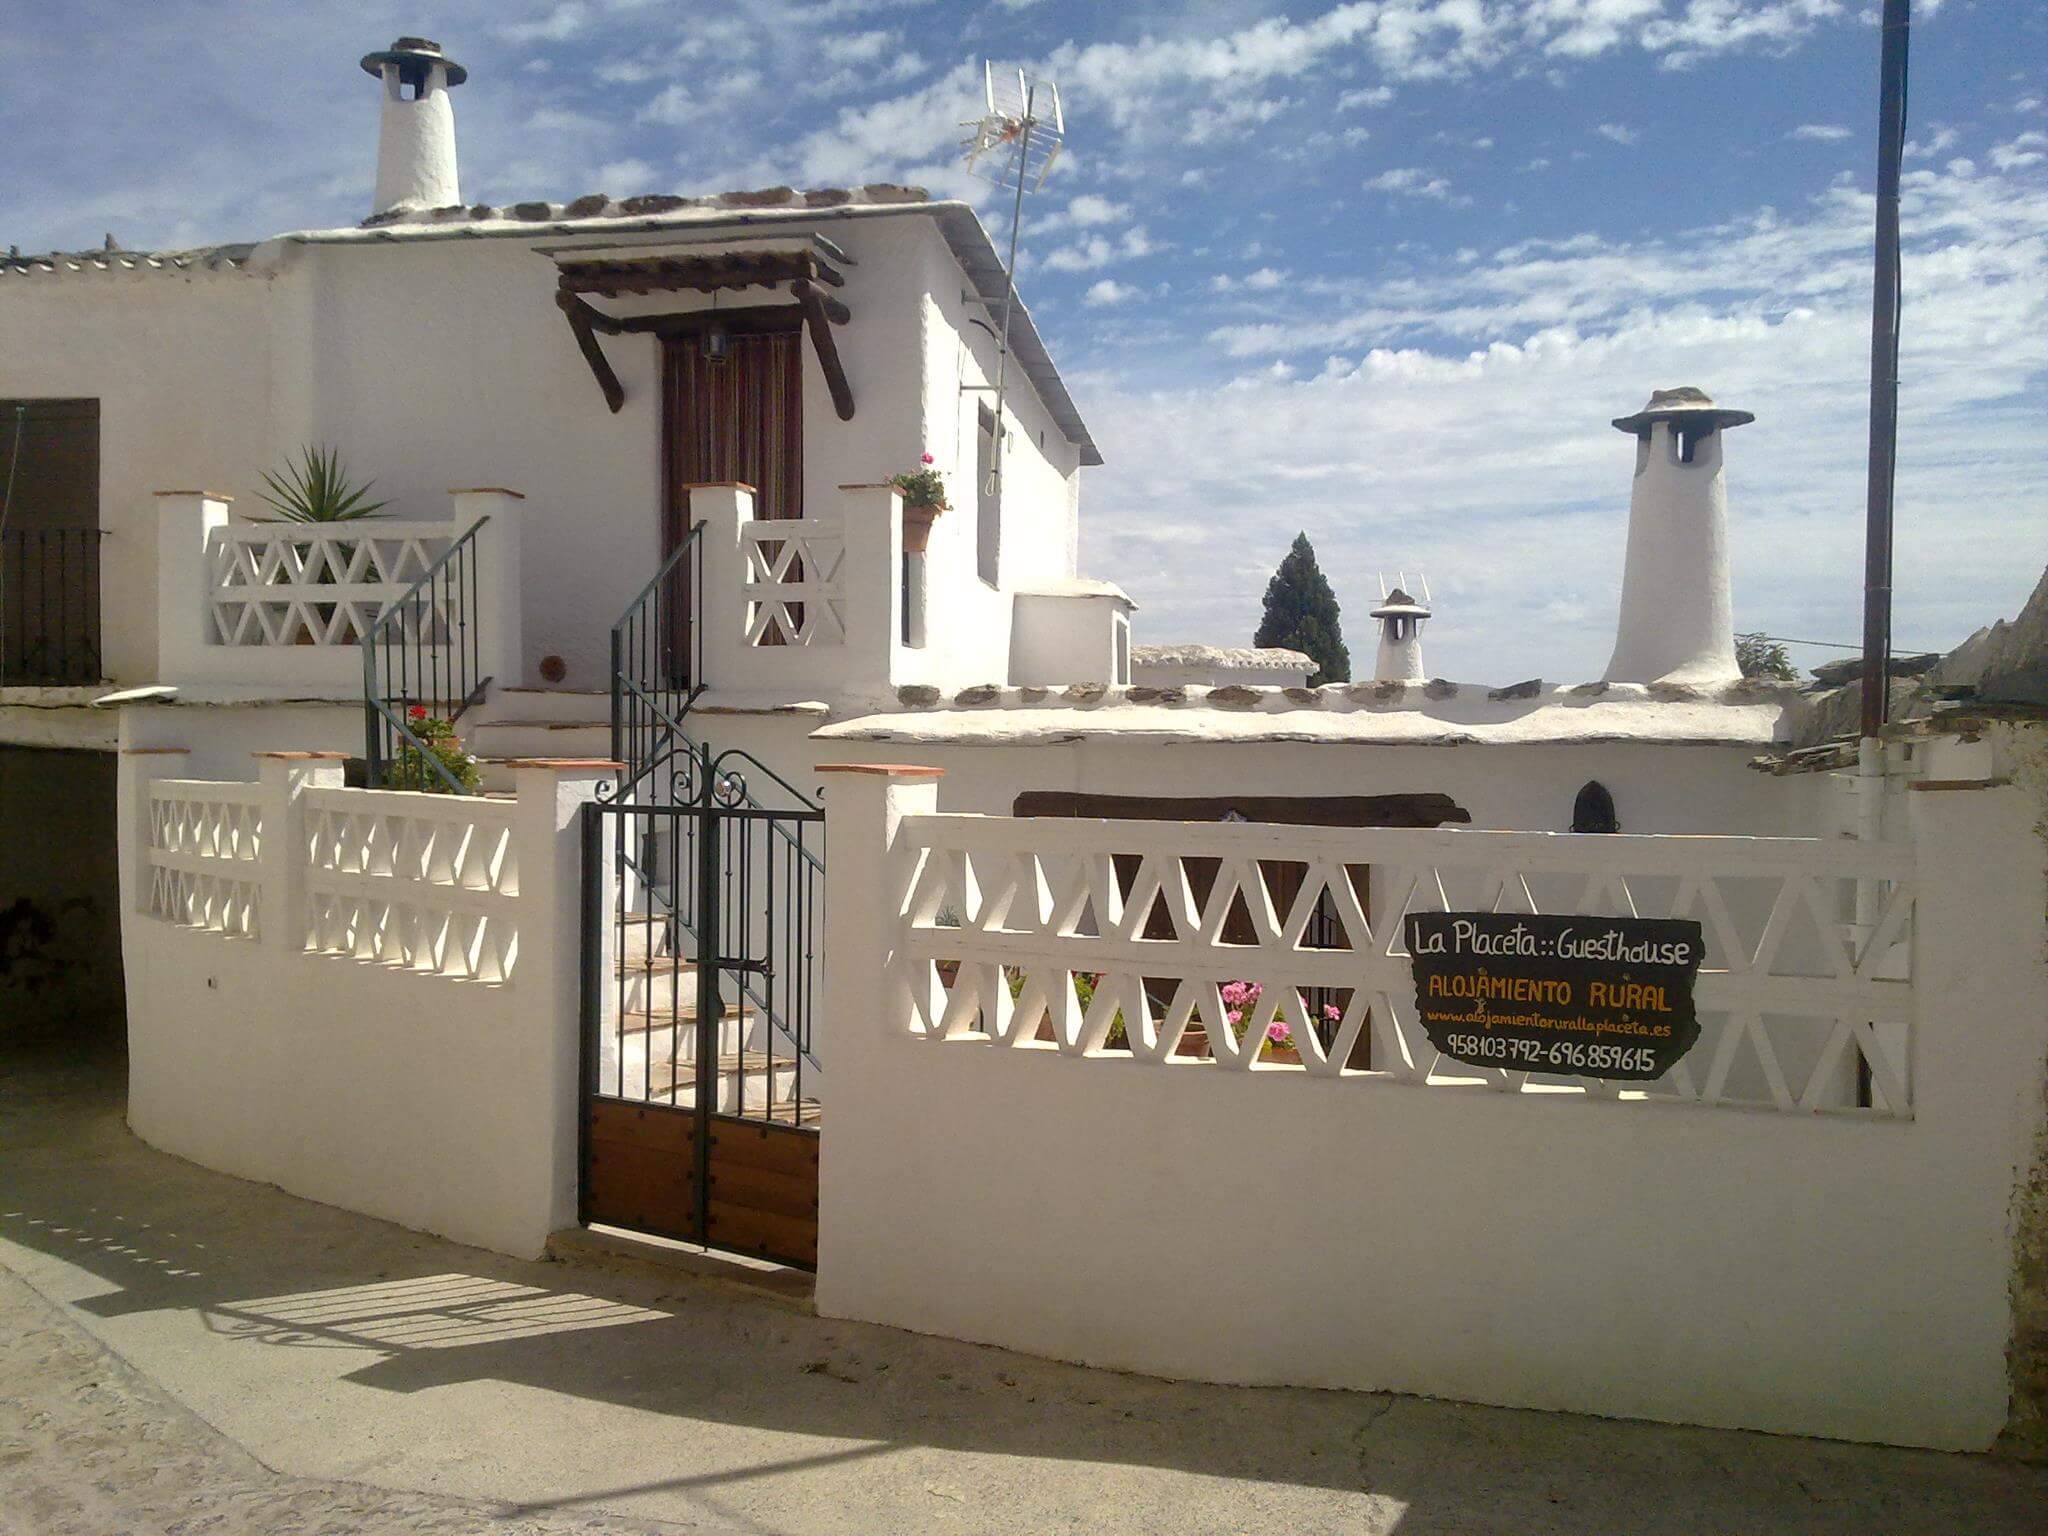 Vivienda Rural La Placeta Guesthouse